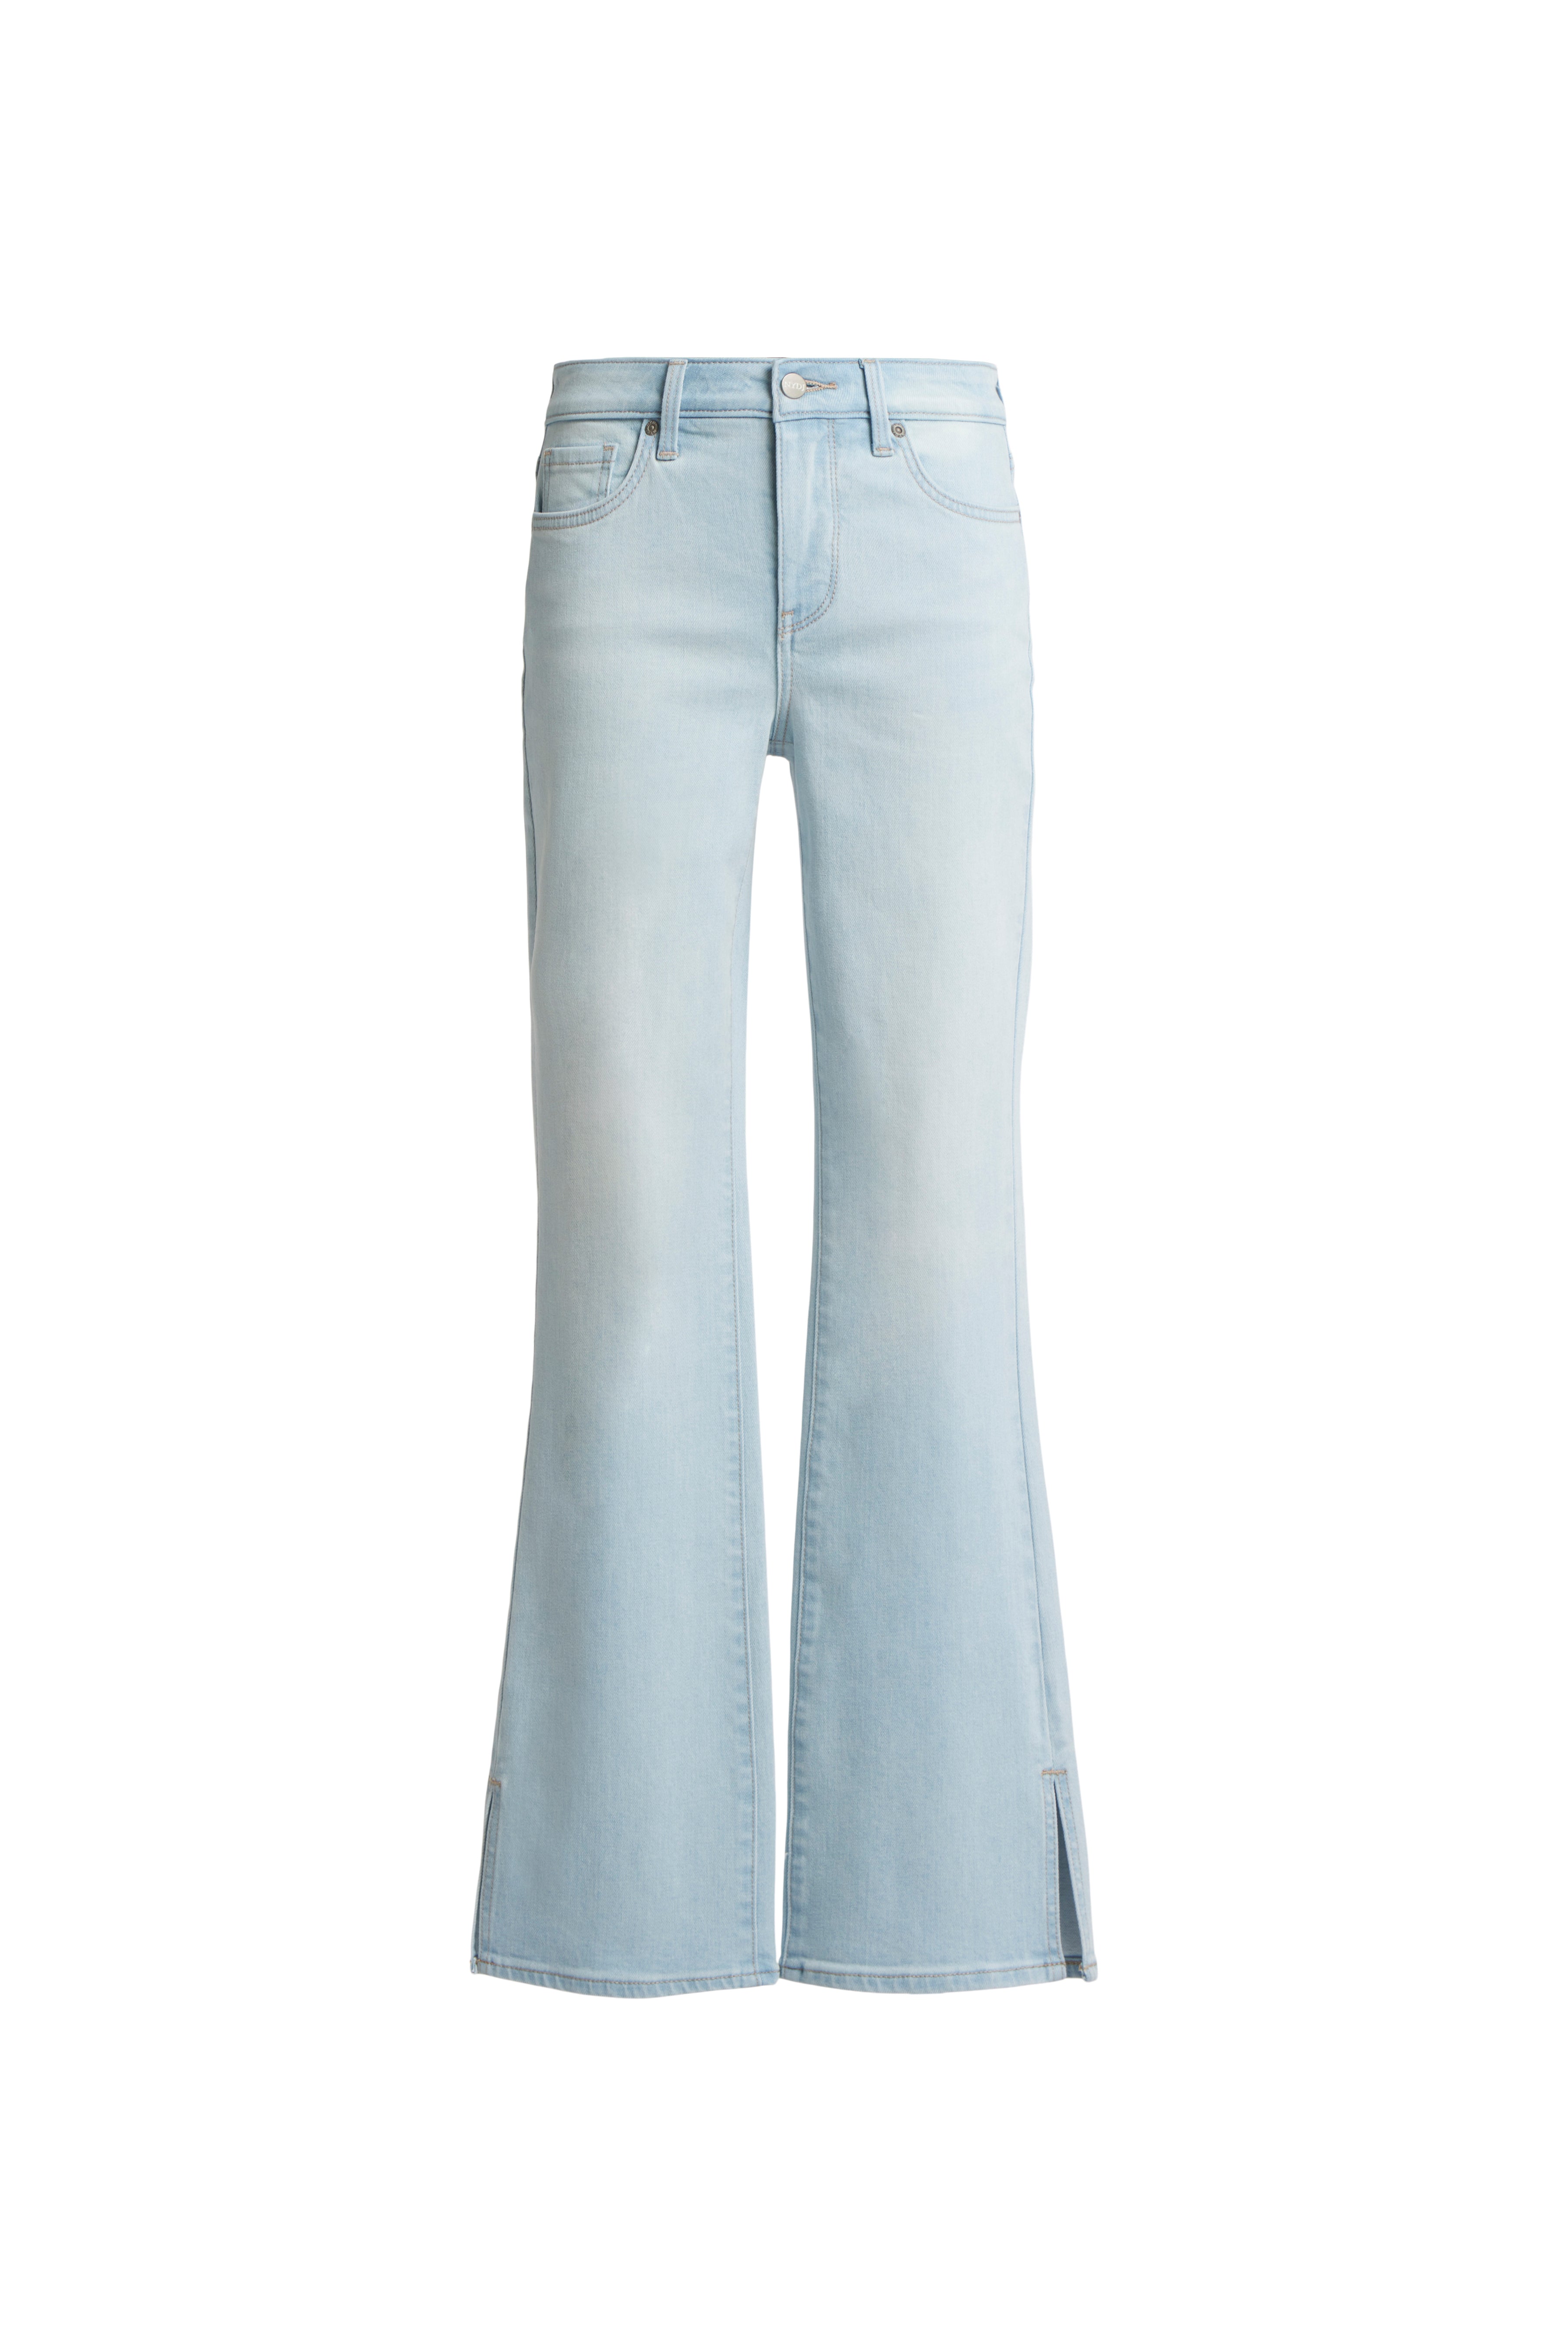 CamaragrancanariaShops Australia - MOTHER high-rise raw cropped jeans -  Navy blue Jeans with belt Maison Margiela